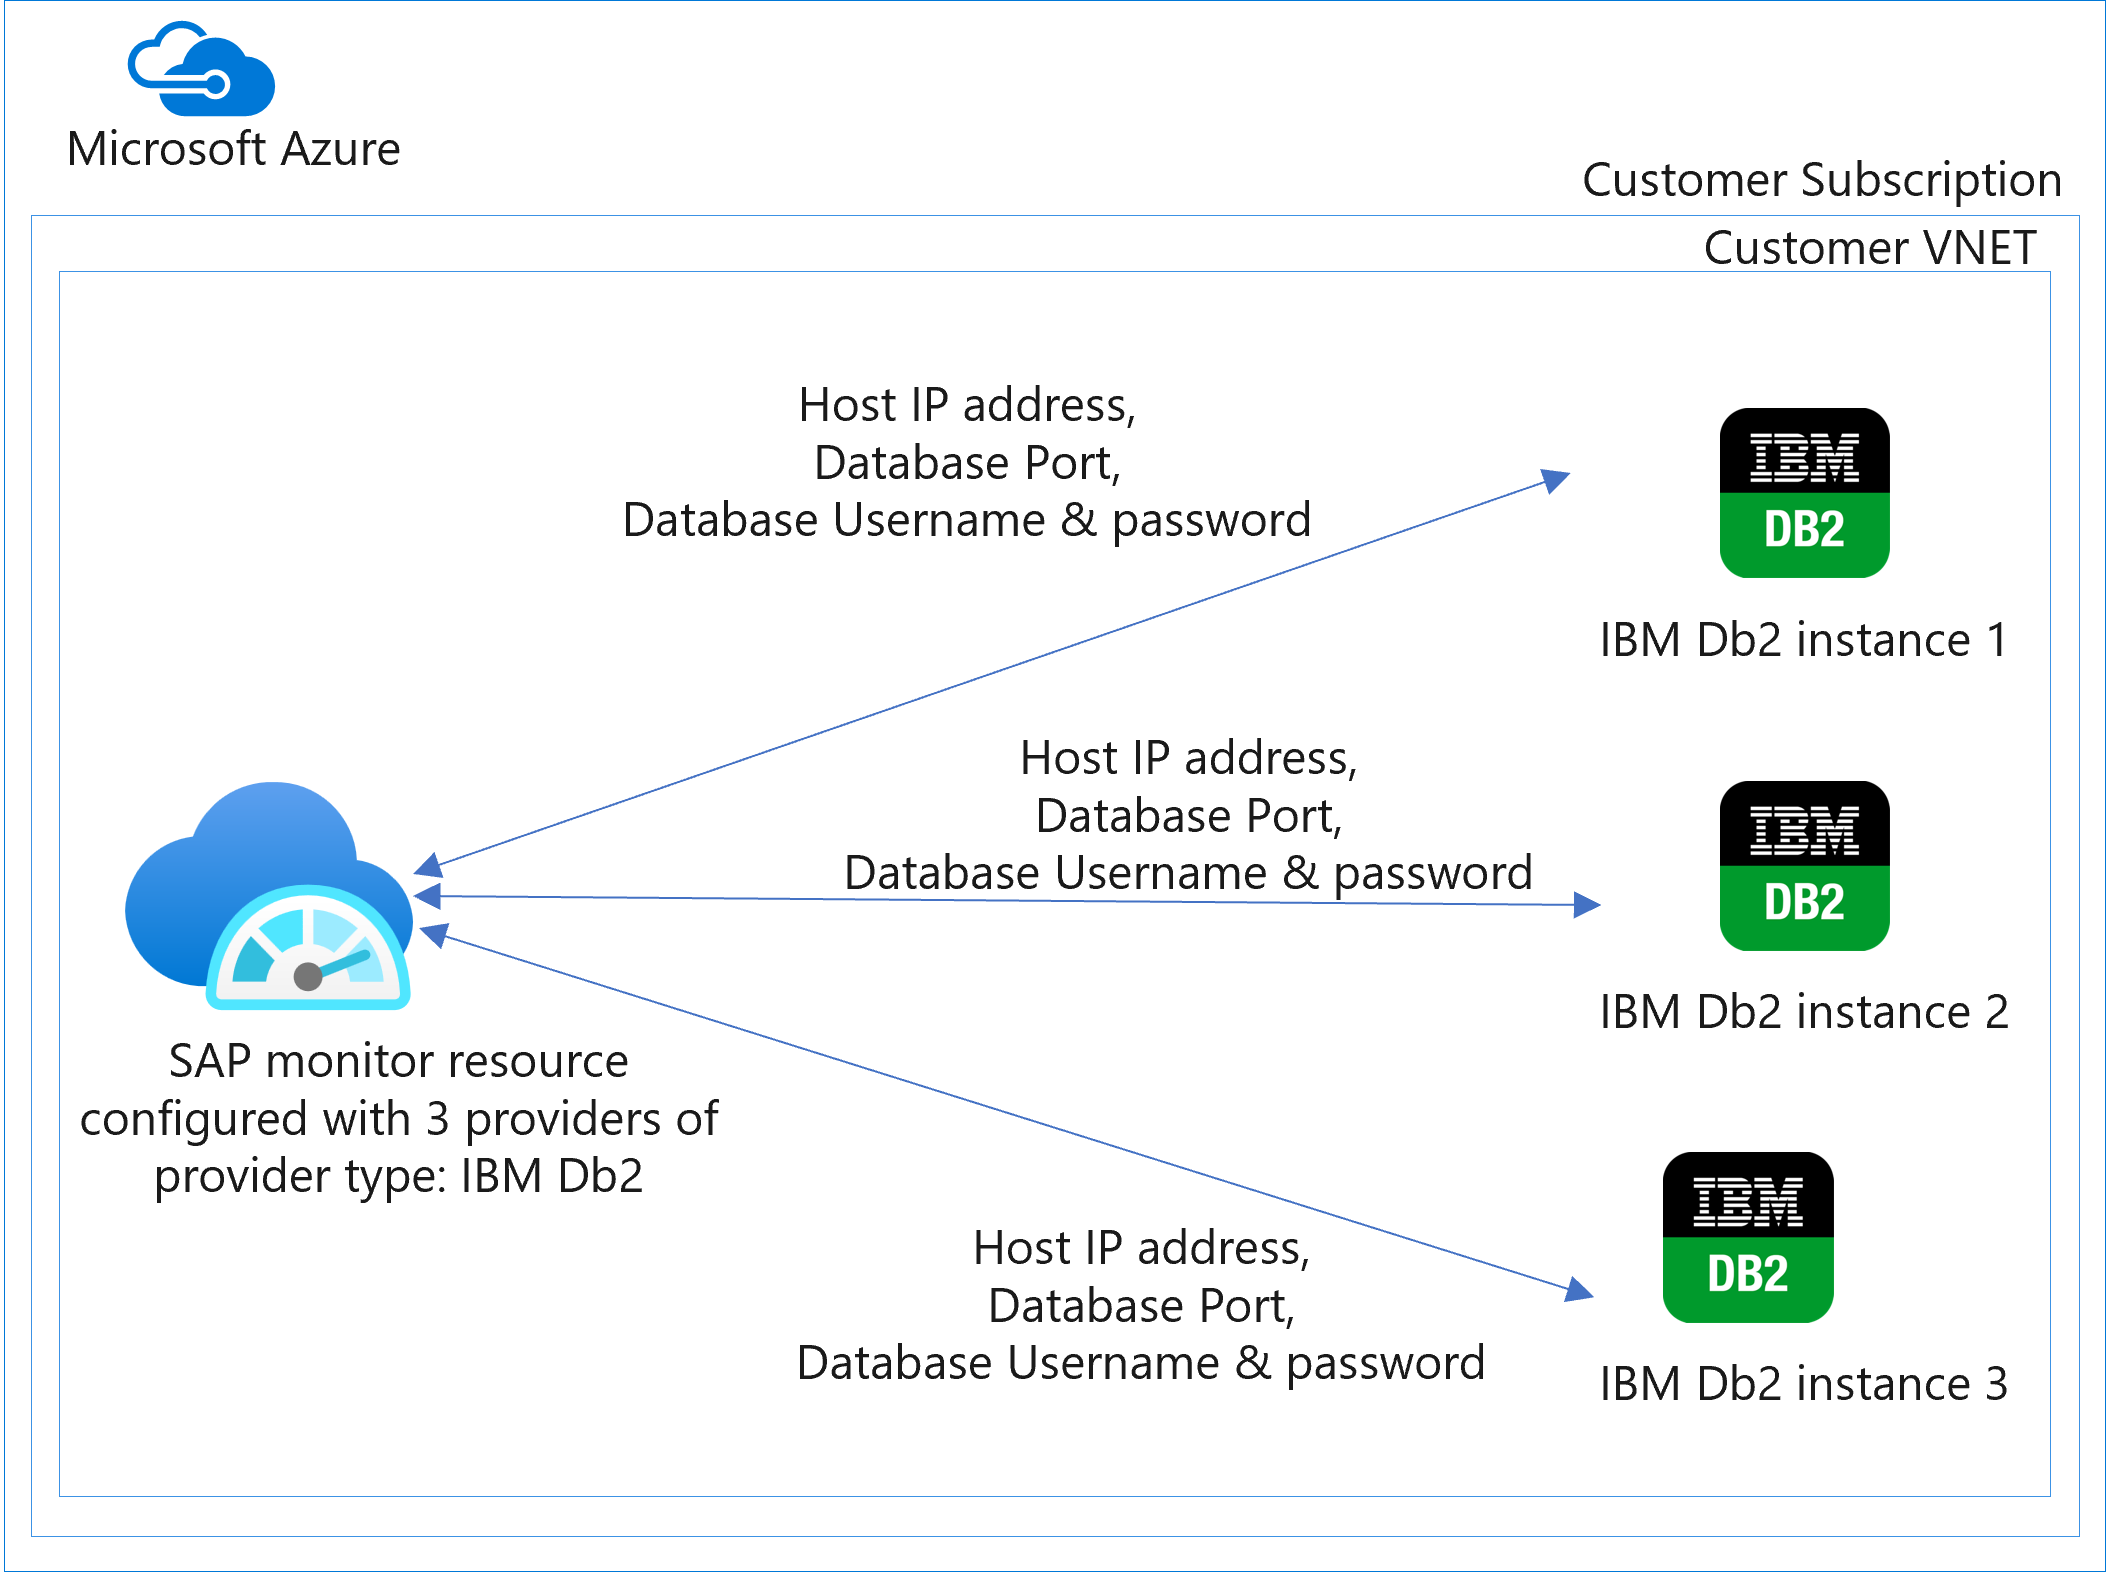 Azure Monitor for SAP ソリューション プロバイダー - IBM Db2 アーキテクチャを示す図。